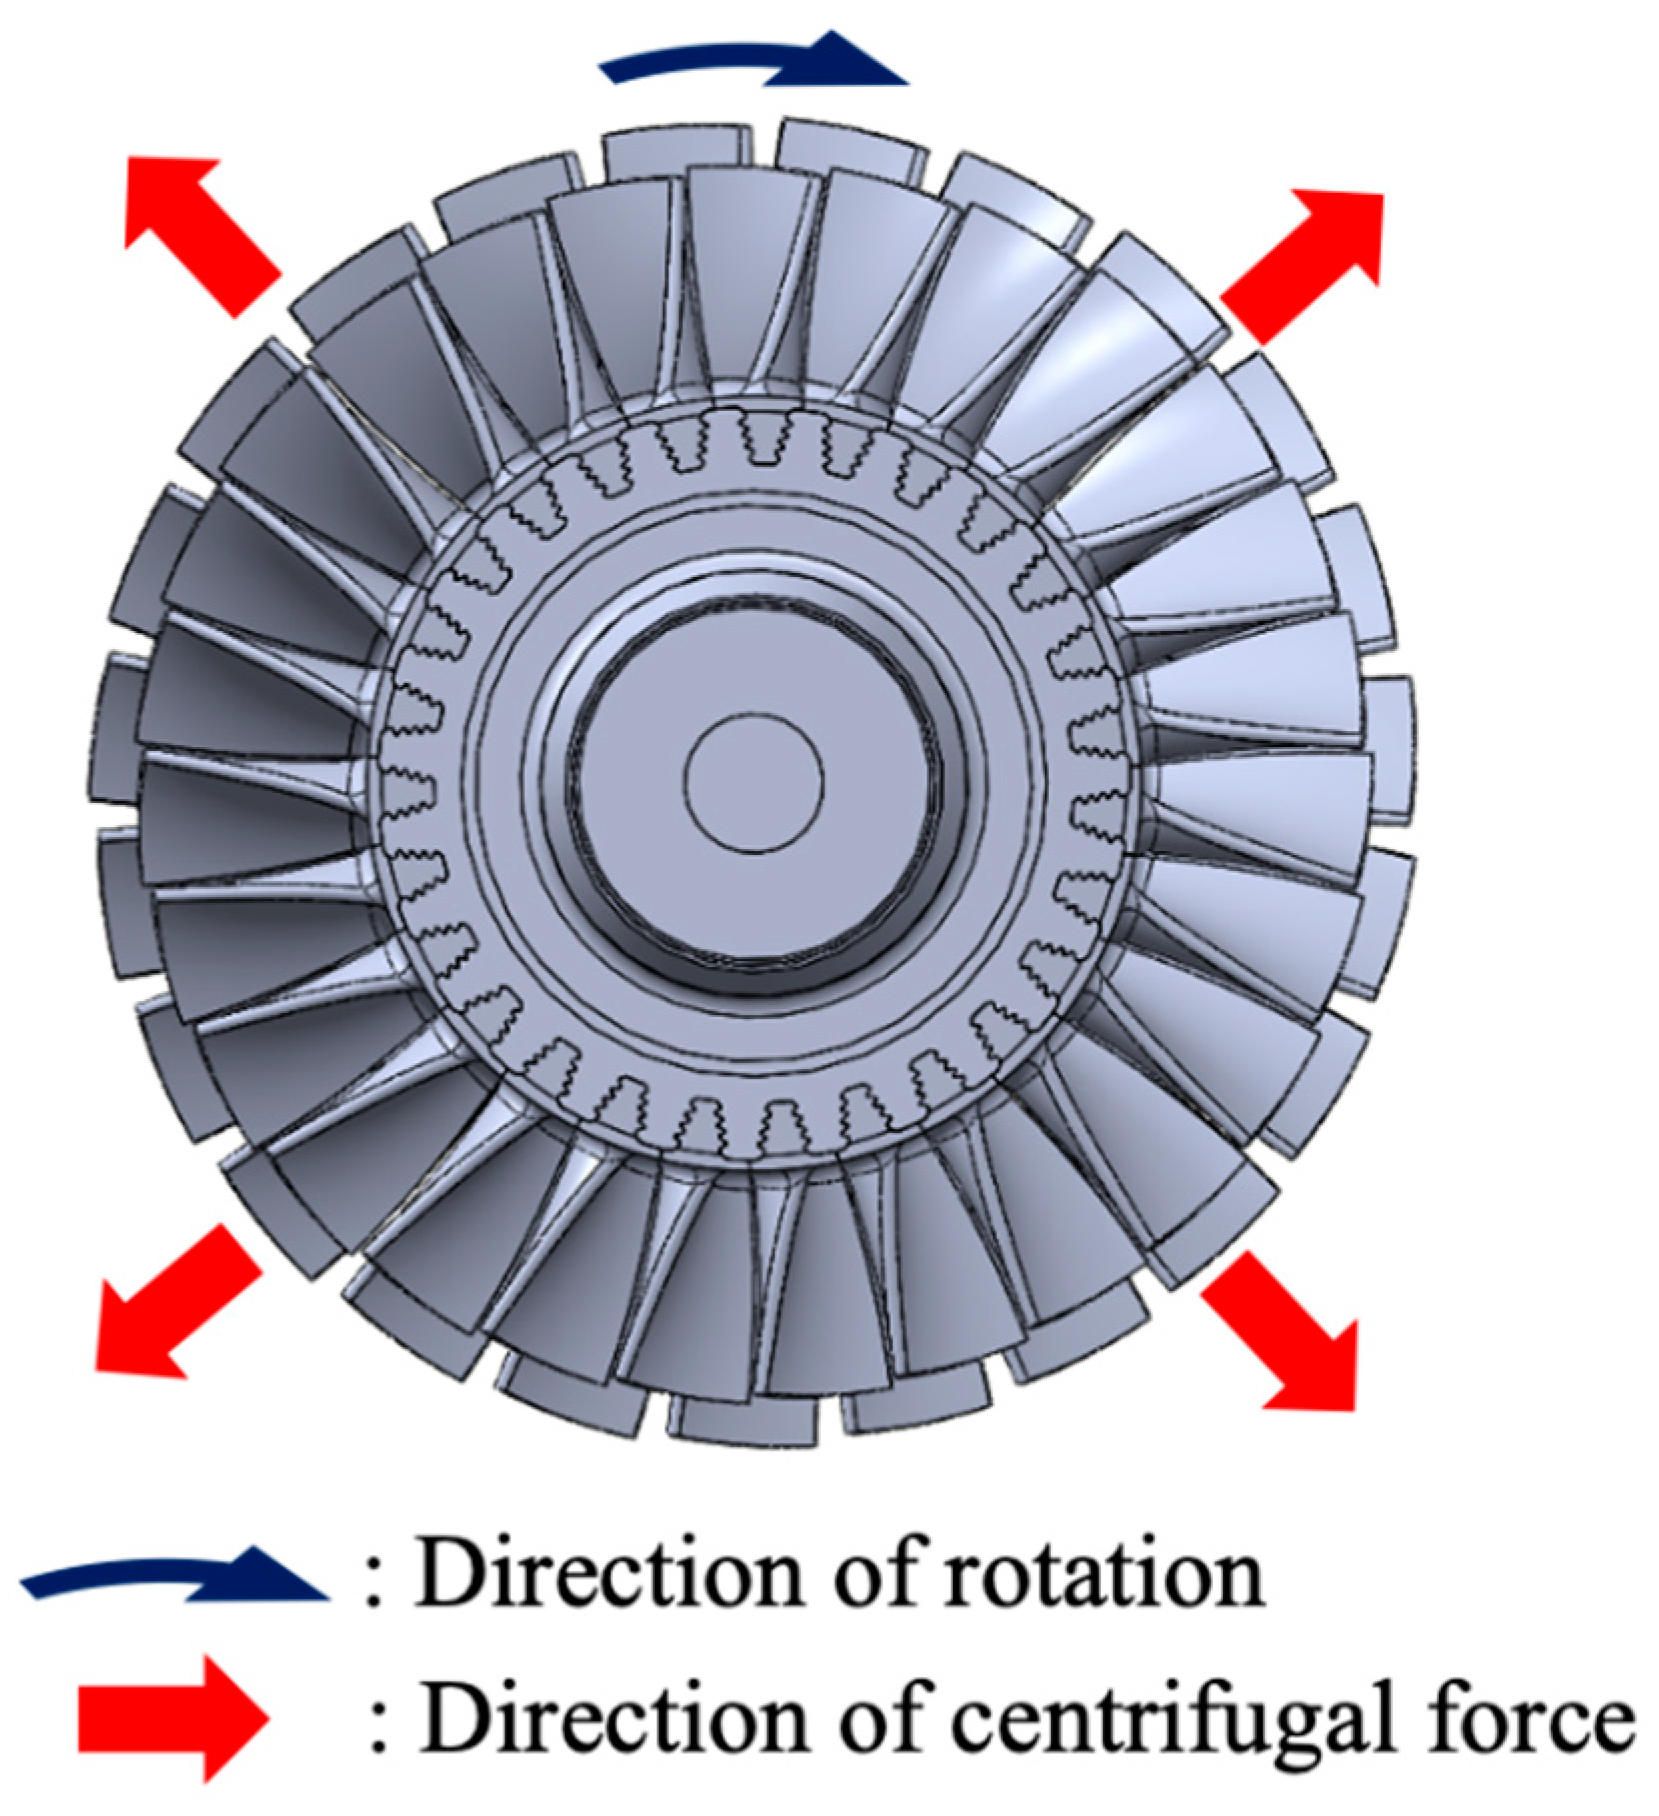 small centrifugal turbine blades